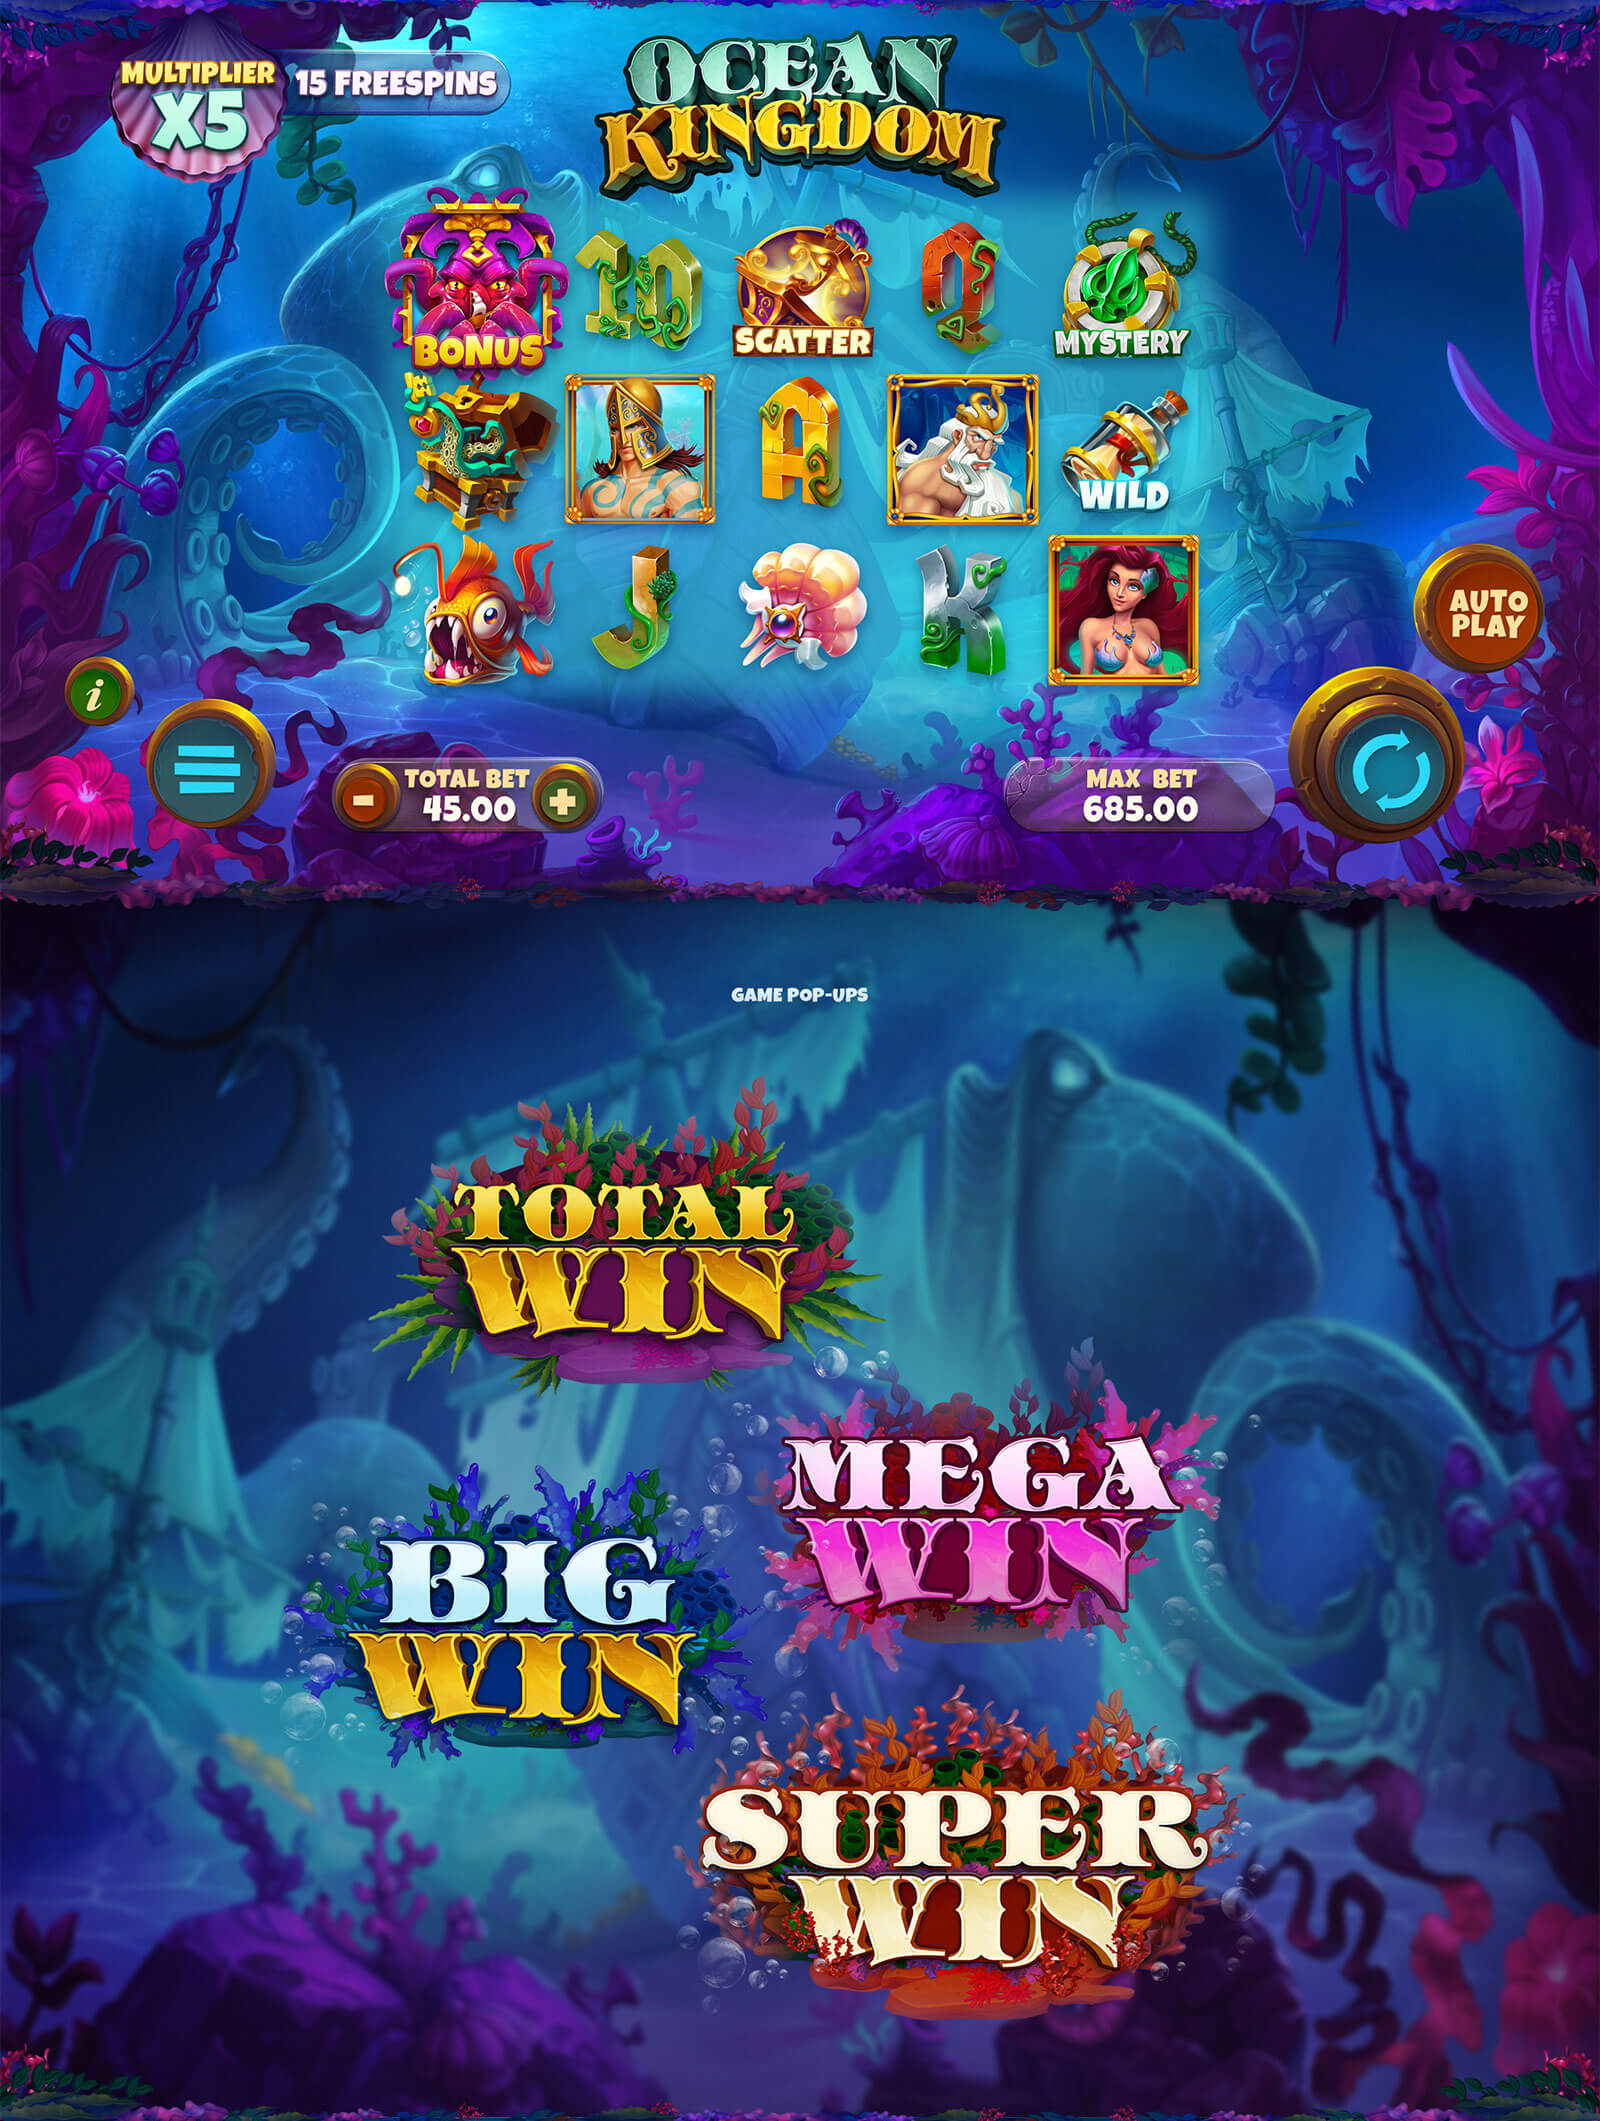 Ocean Kingdom slot machine design